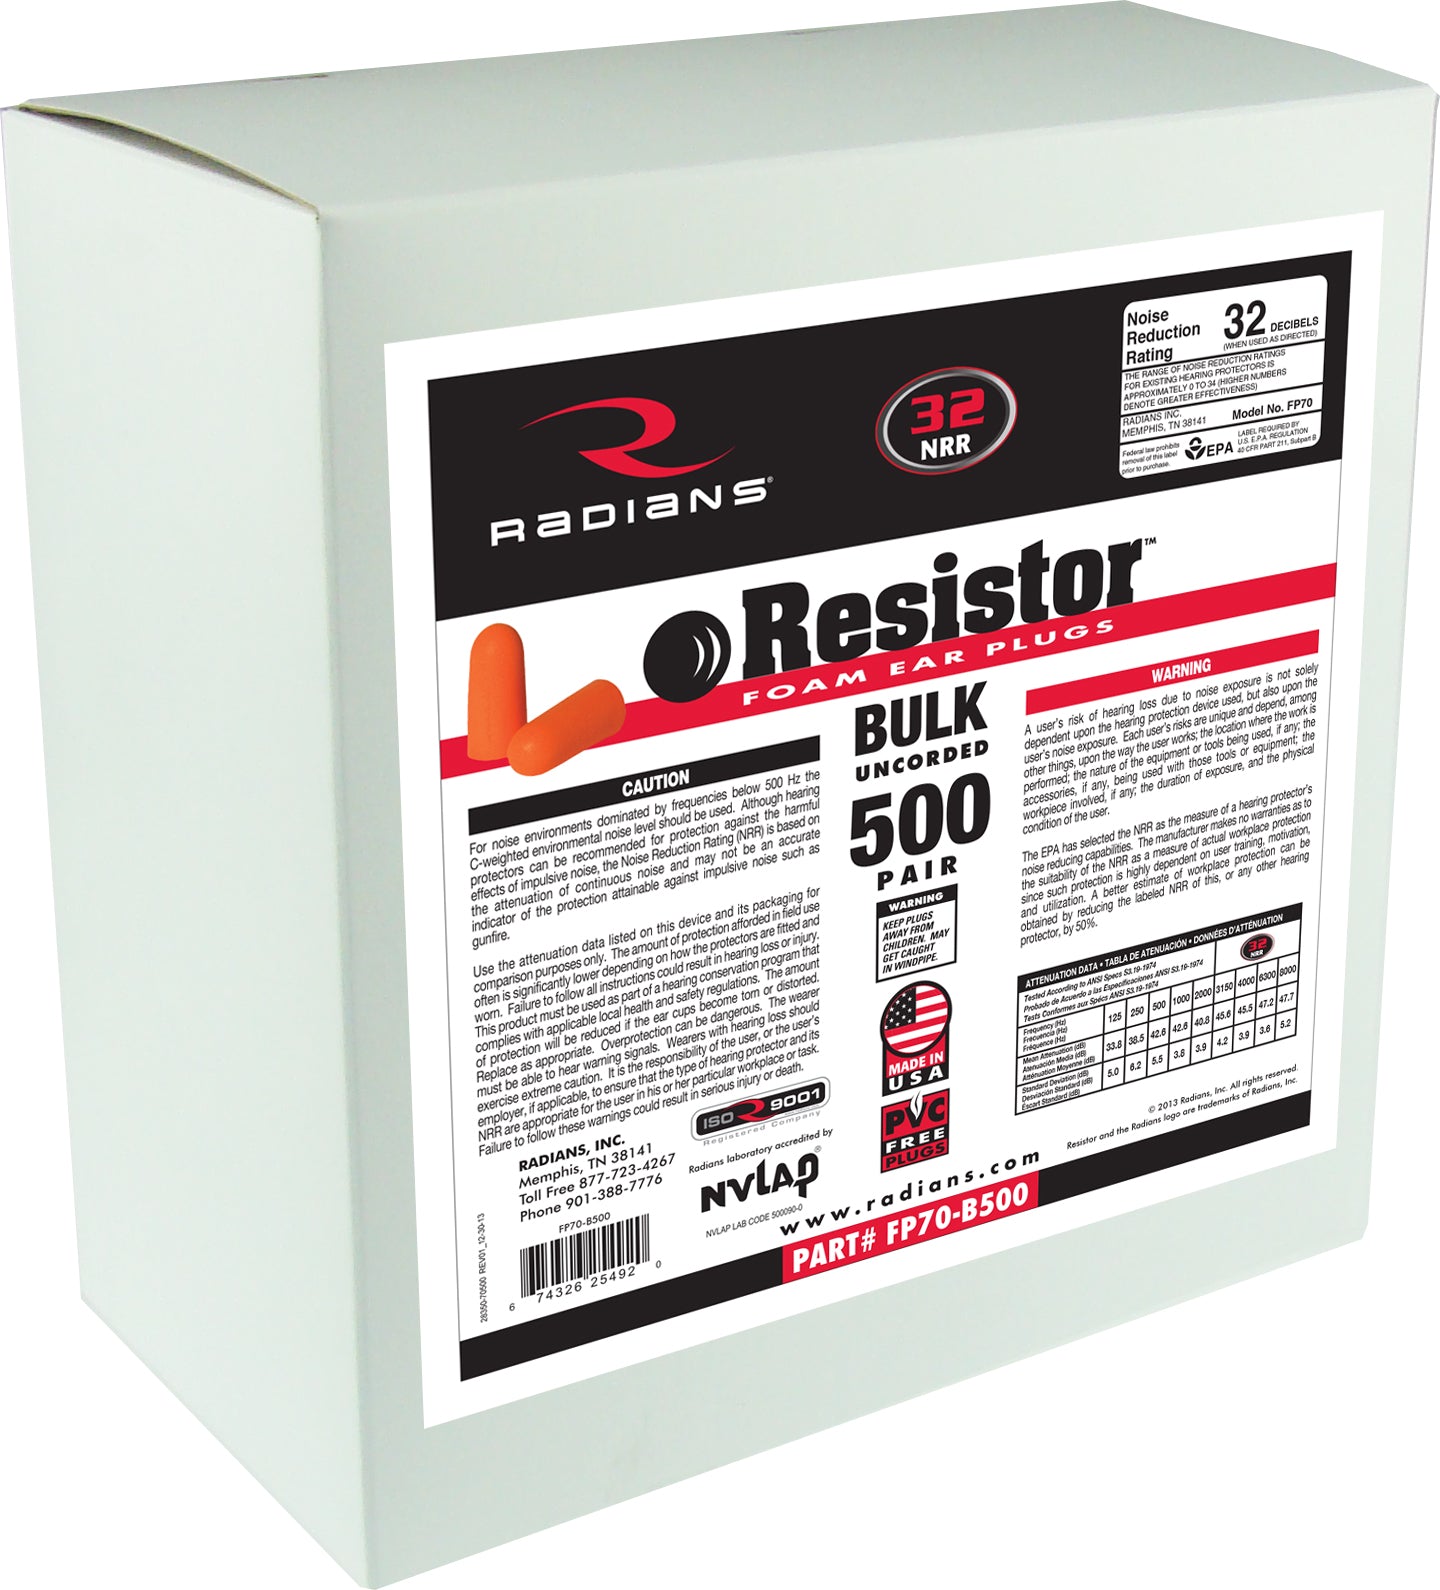 Radians Resistor® 32 Foam Uncorded Earplug Dispenser Refill-eSafety Supplies, Inc